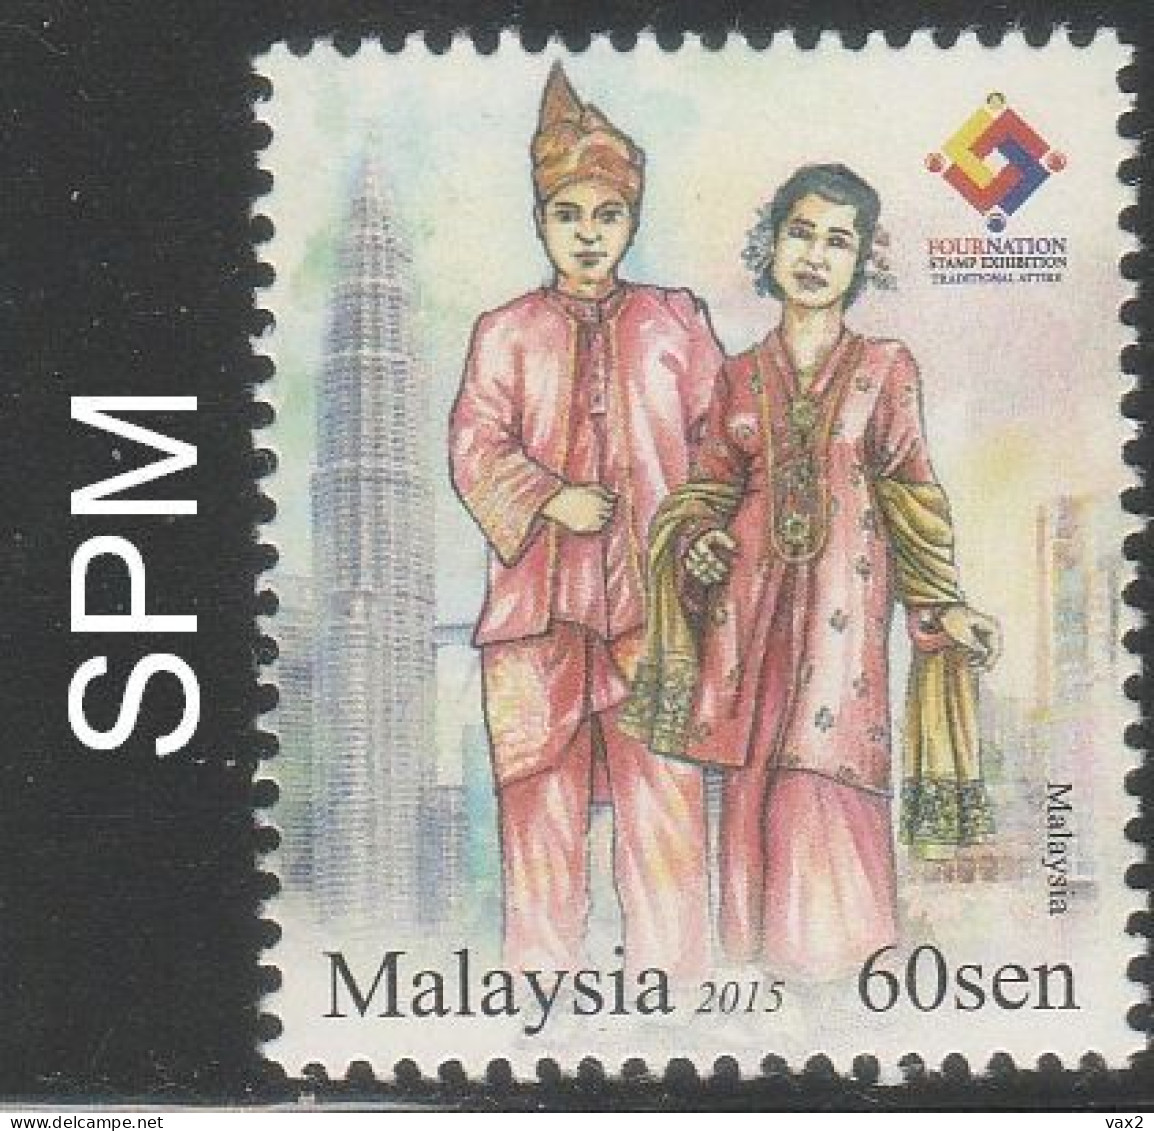 Malaysia 2015 FourNation Stamp Exhibition - Malaysia Variety WMK SWU MNH - Malaysia (1964-...)